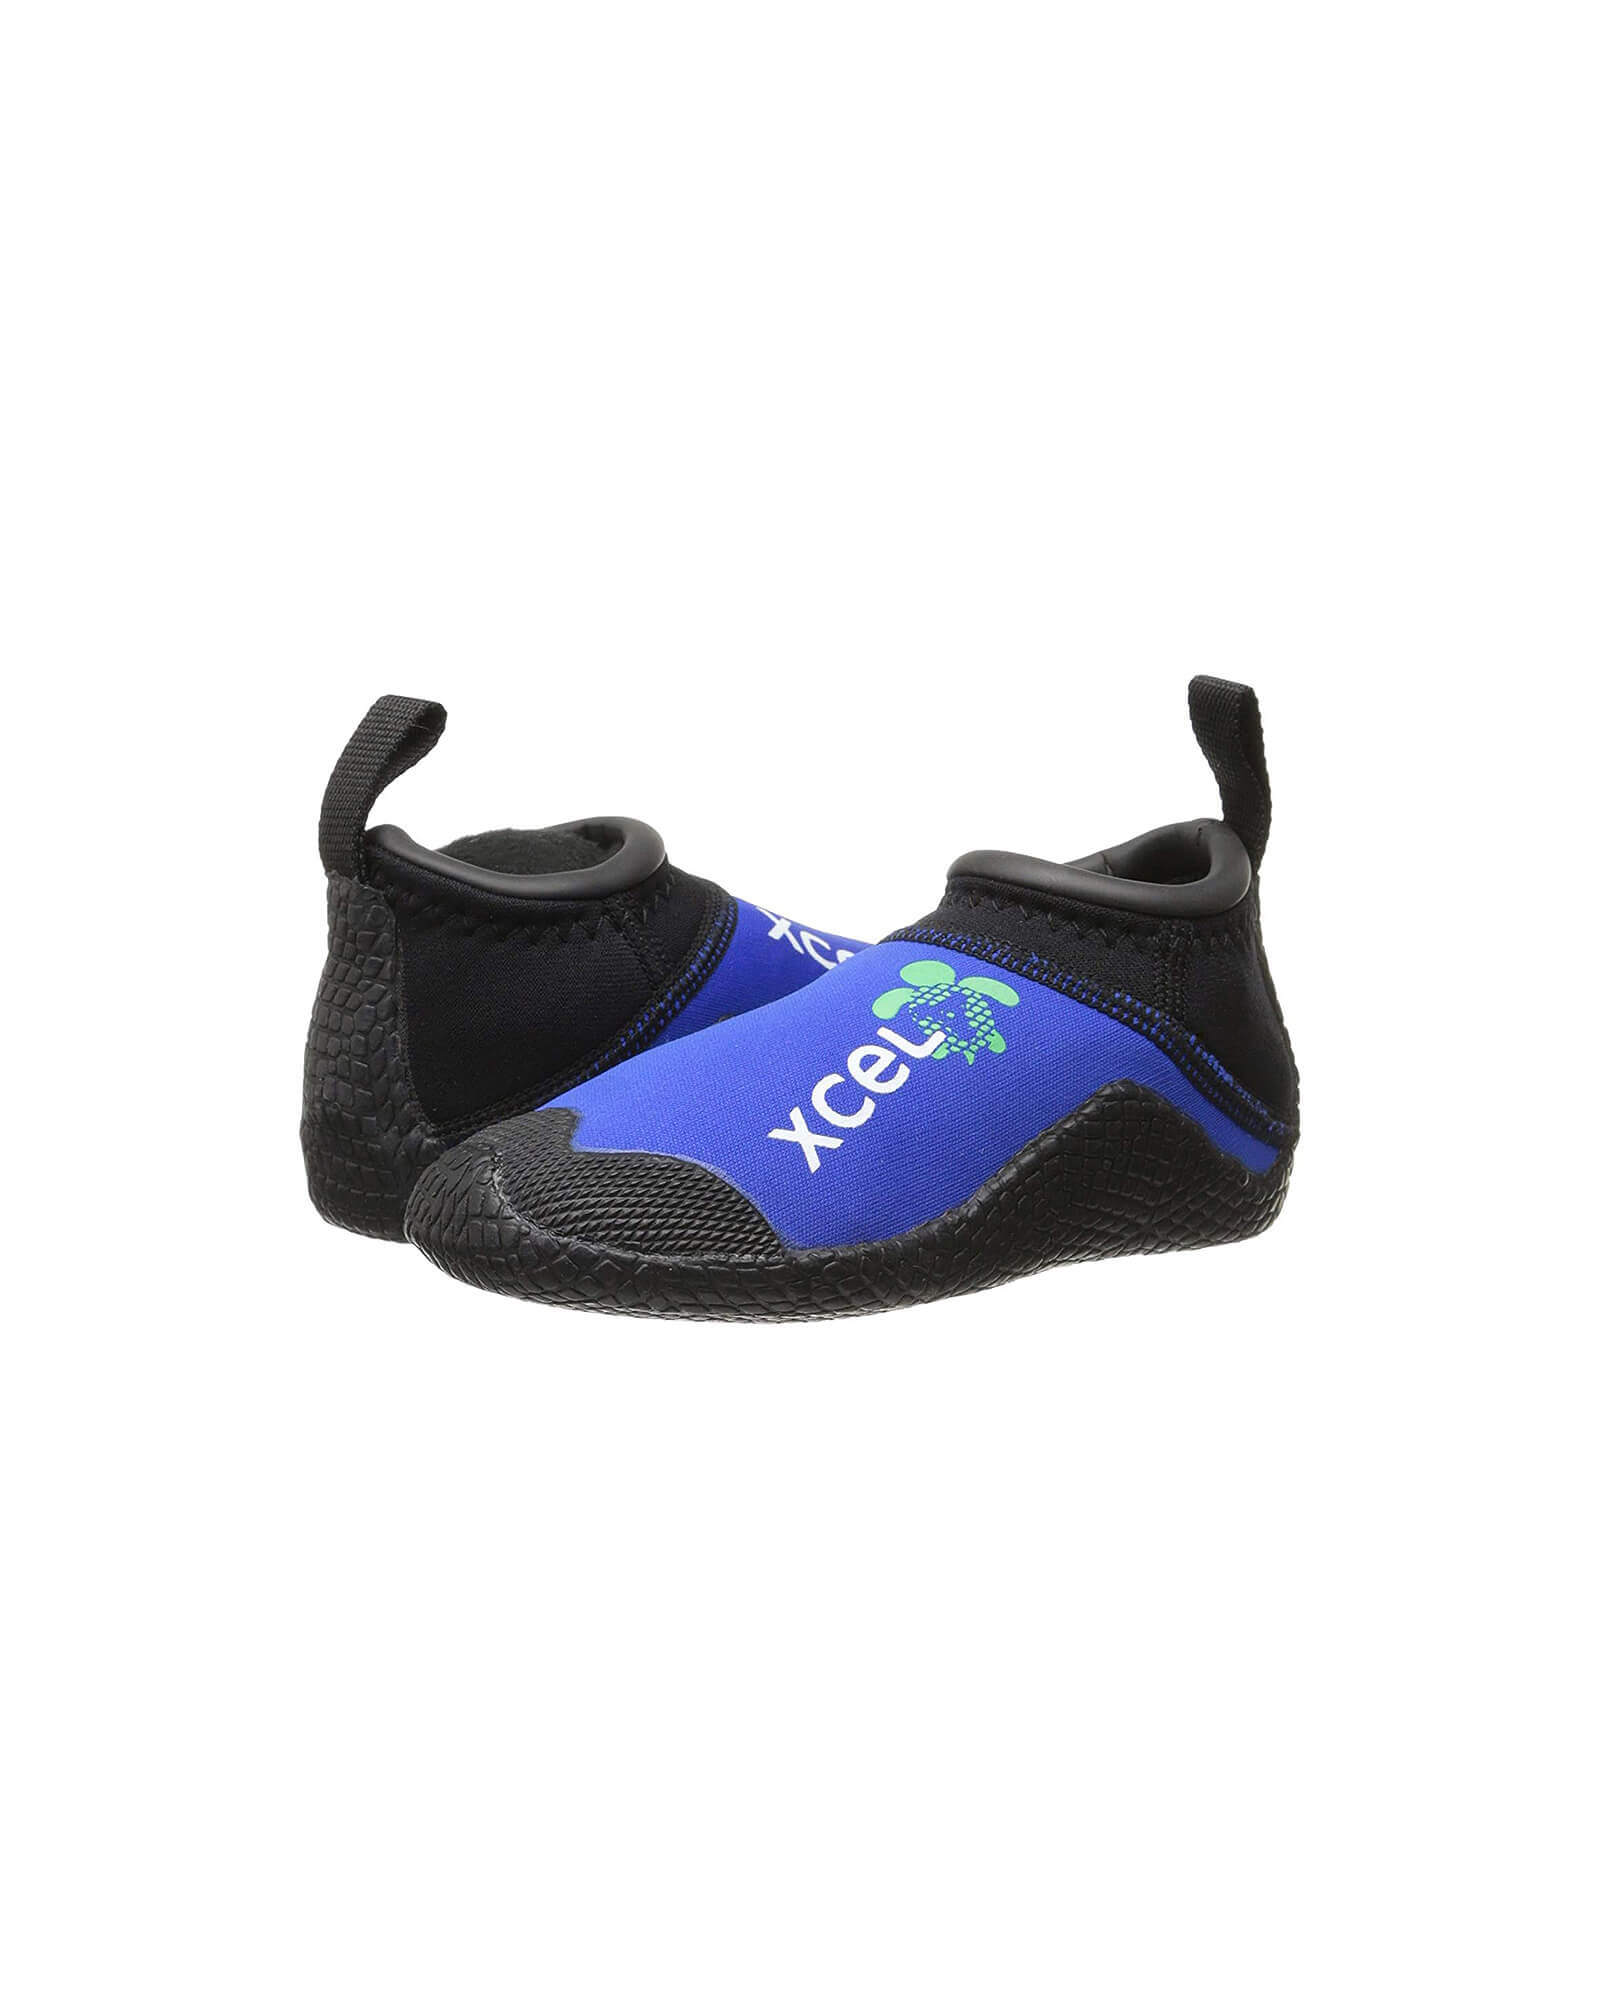 1mm Toddler's XCEL Reef Walker Boots for Kids